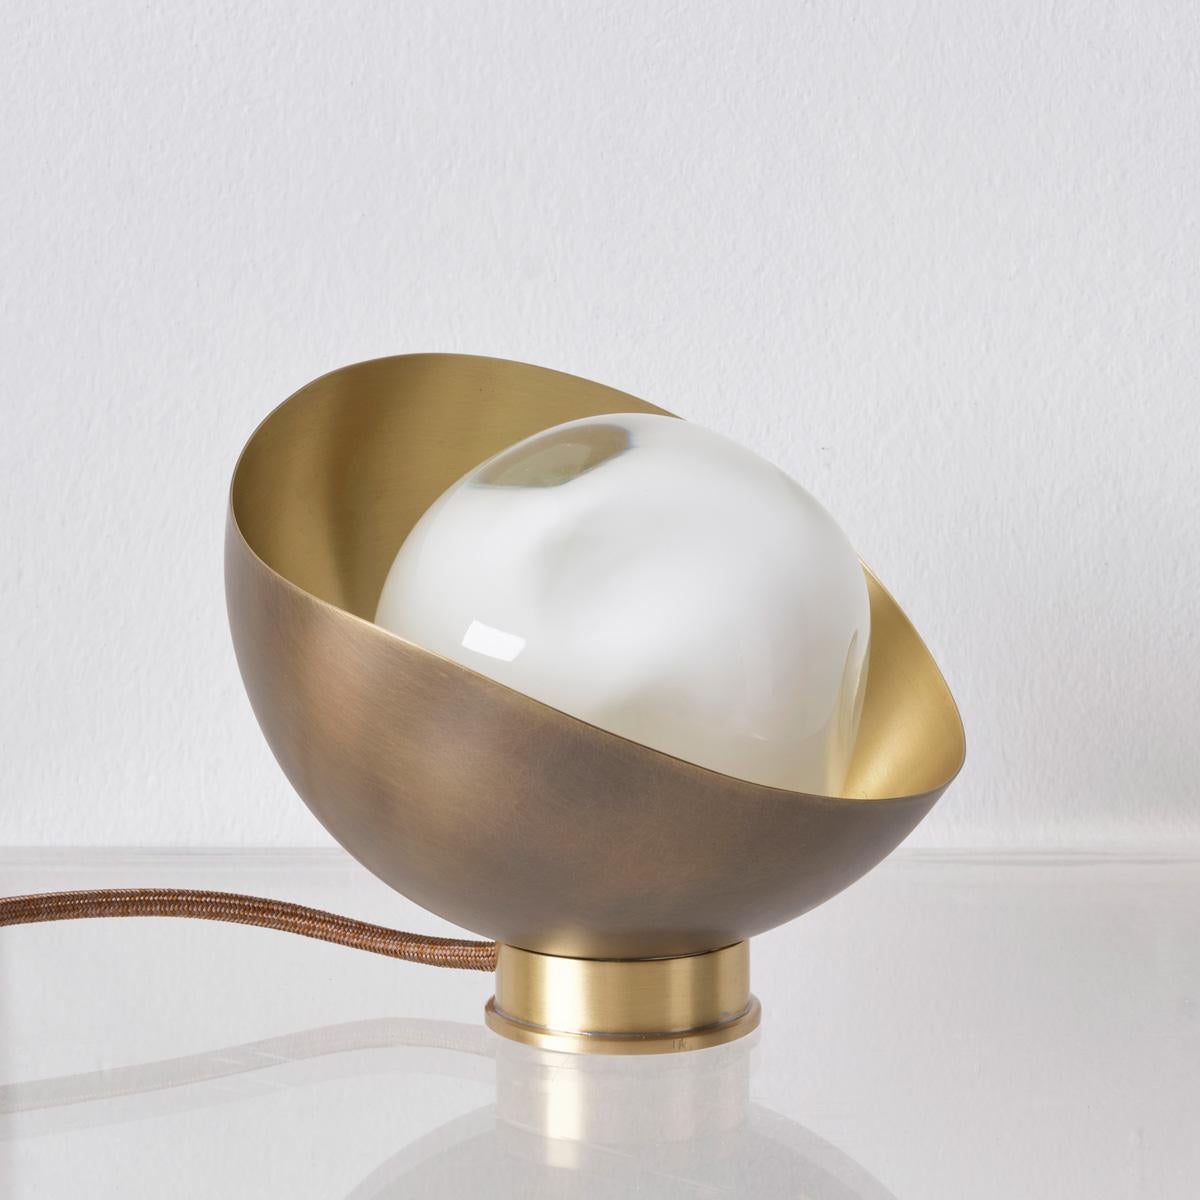 Italian Perla Mini Table Lamp by Gaspare Asaro. Bronze and Satin Brass Finish For Sale